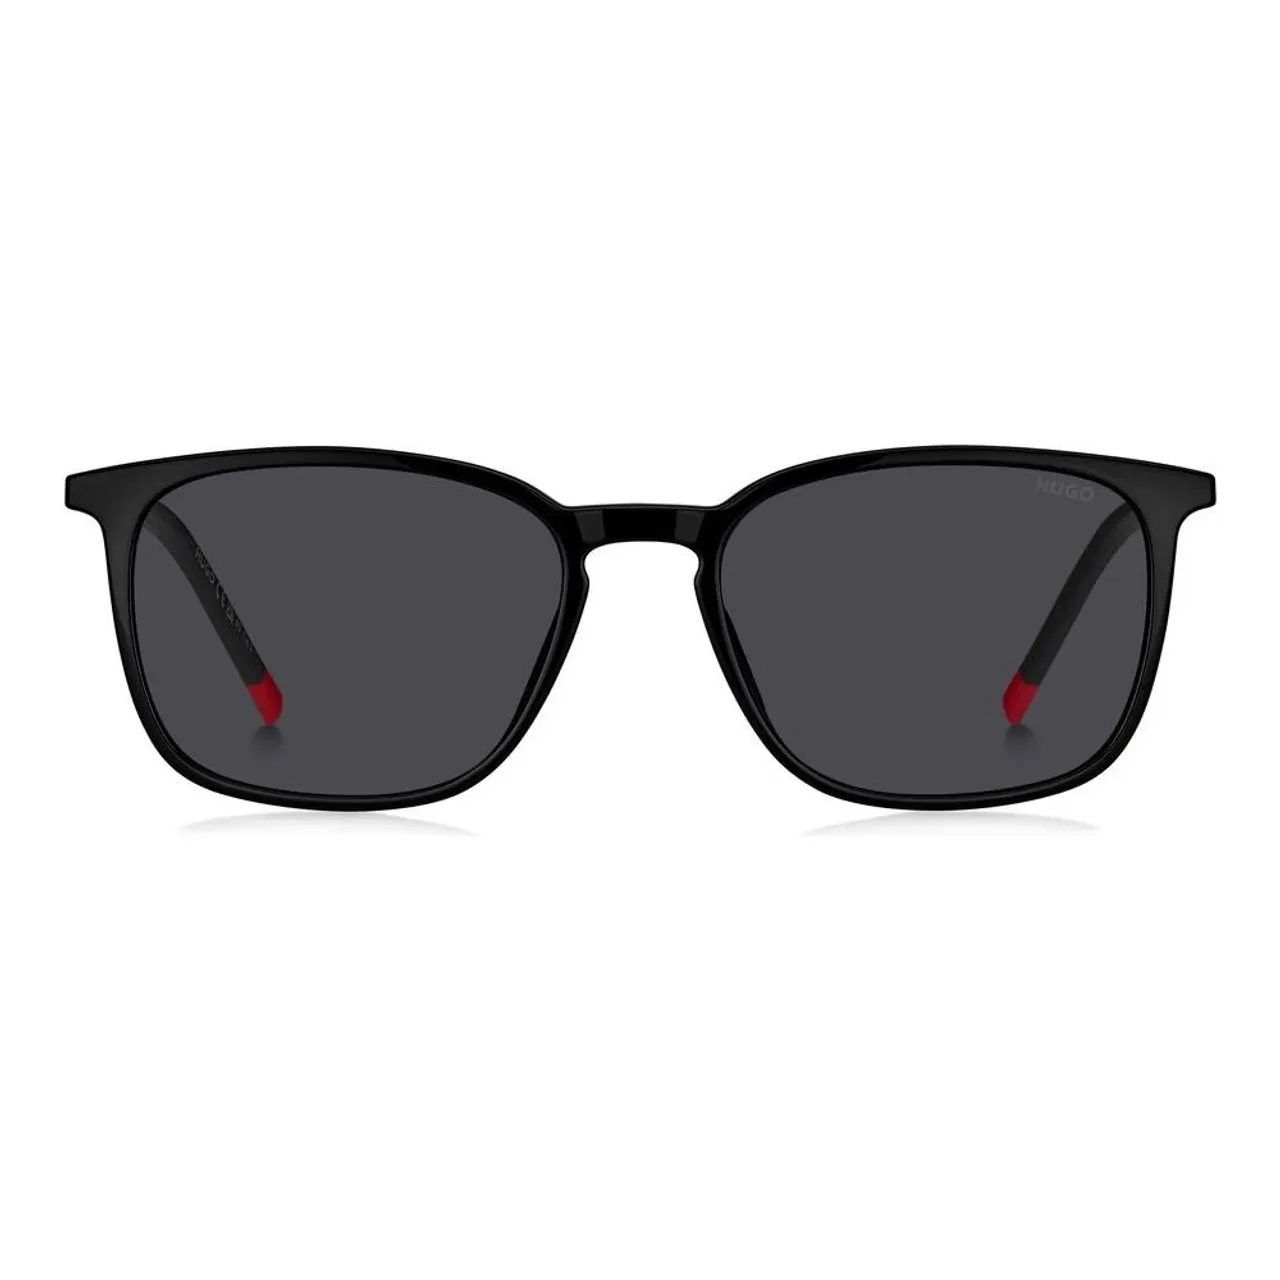 Hugo Boss , Black/Grey Sunglasses ,Black male, Sizes: